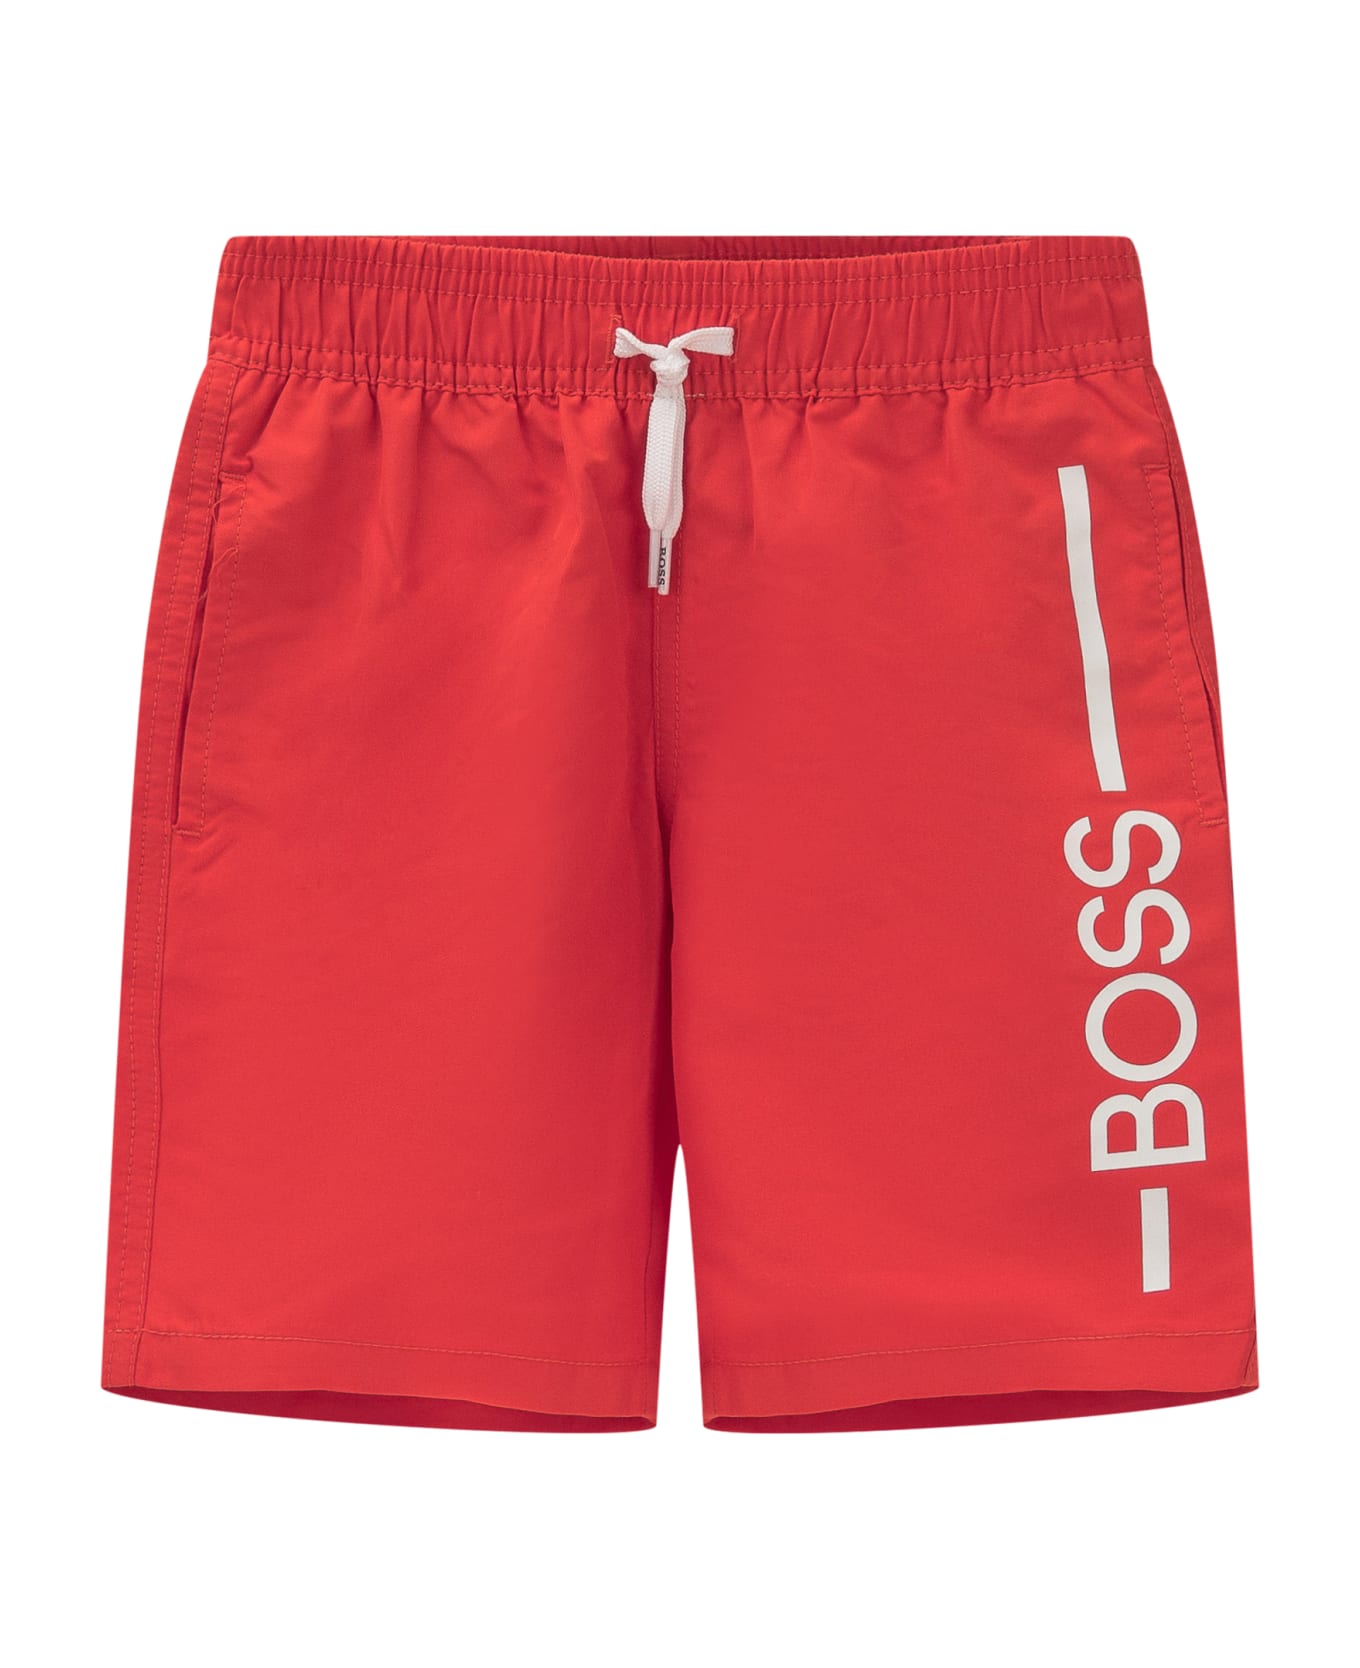 Hugo Boss Swim Shorts - 992